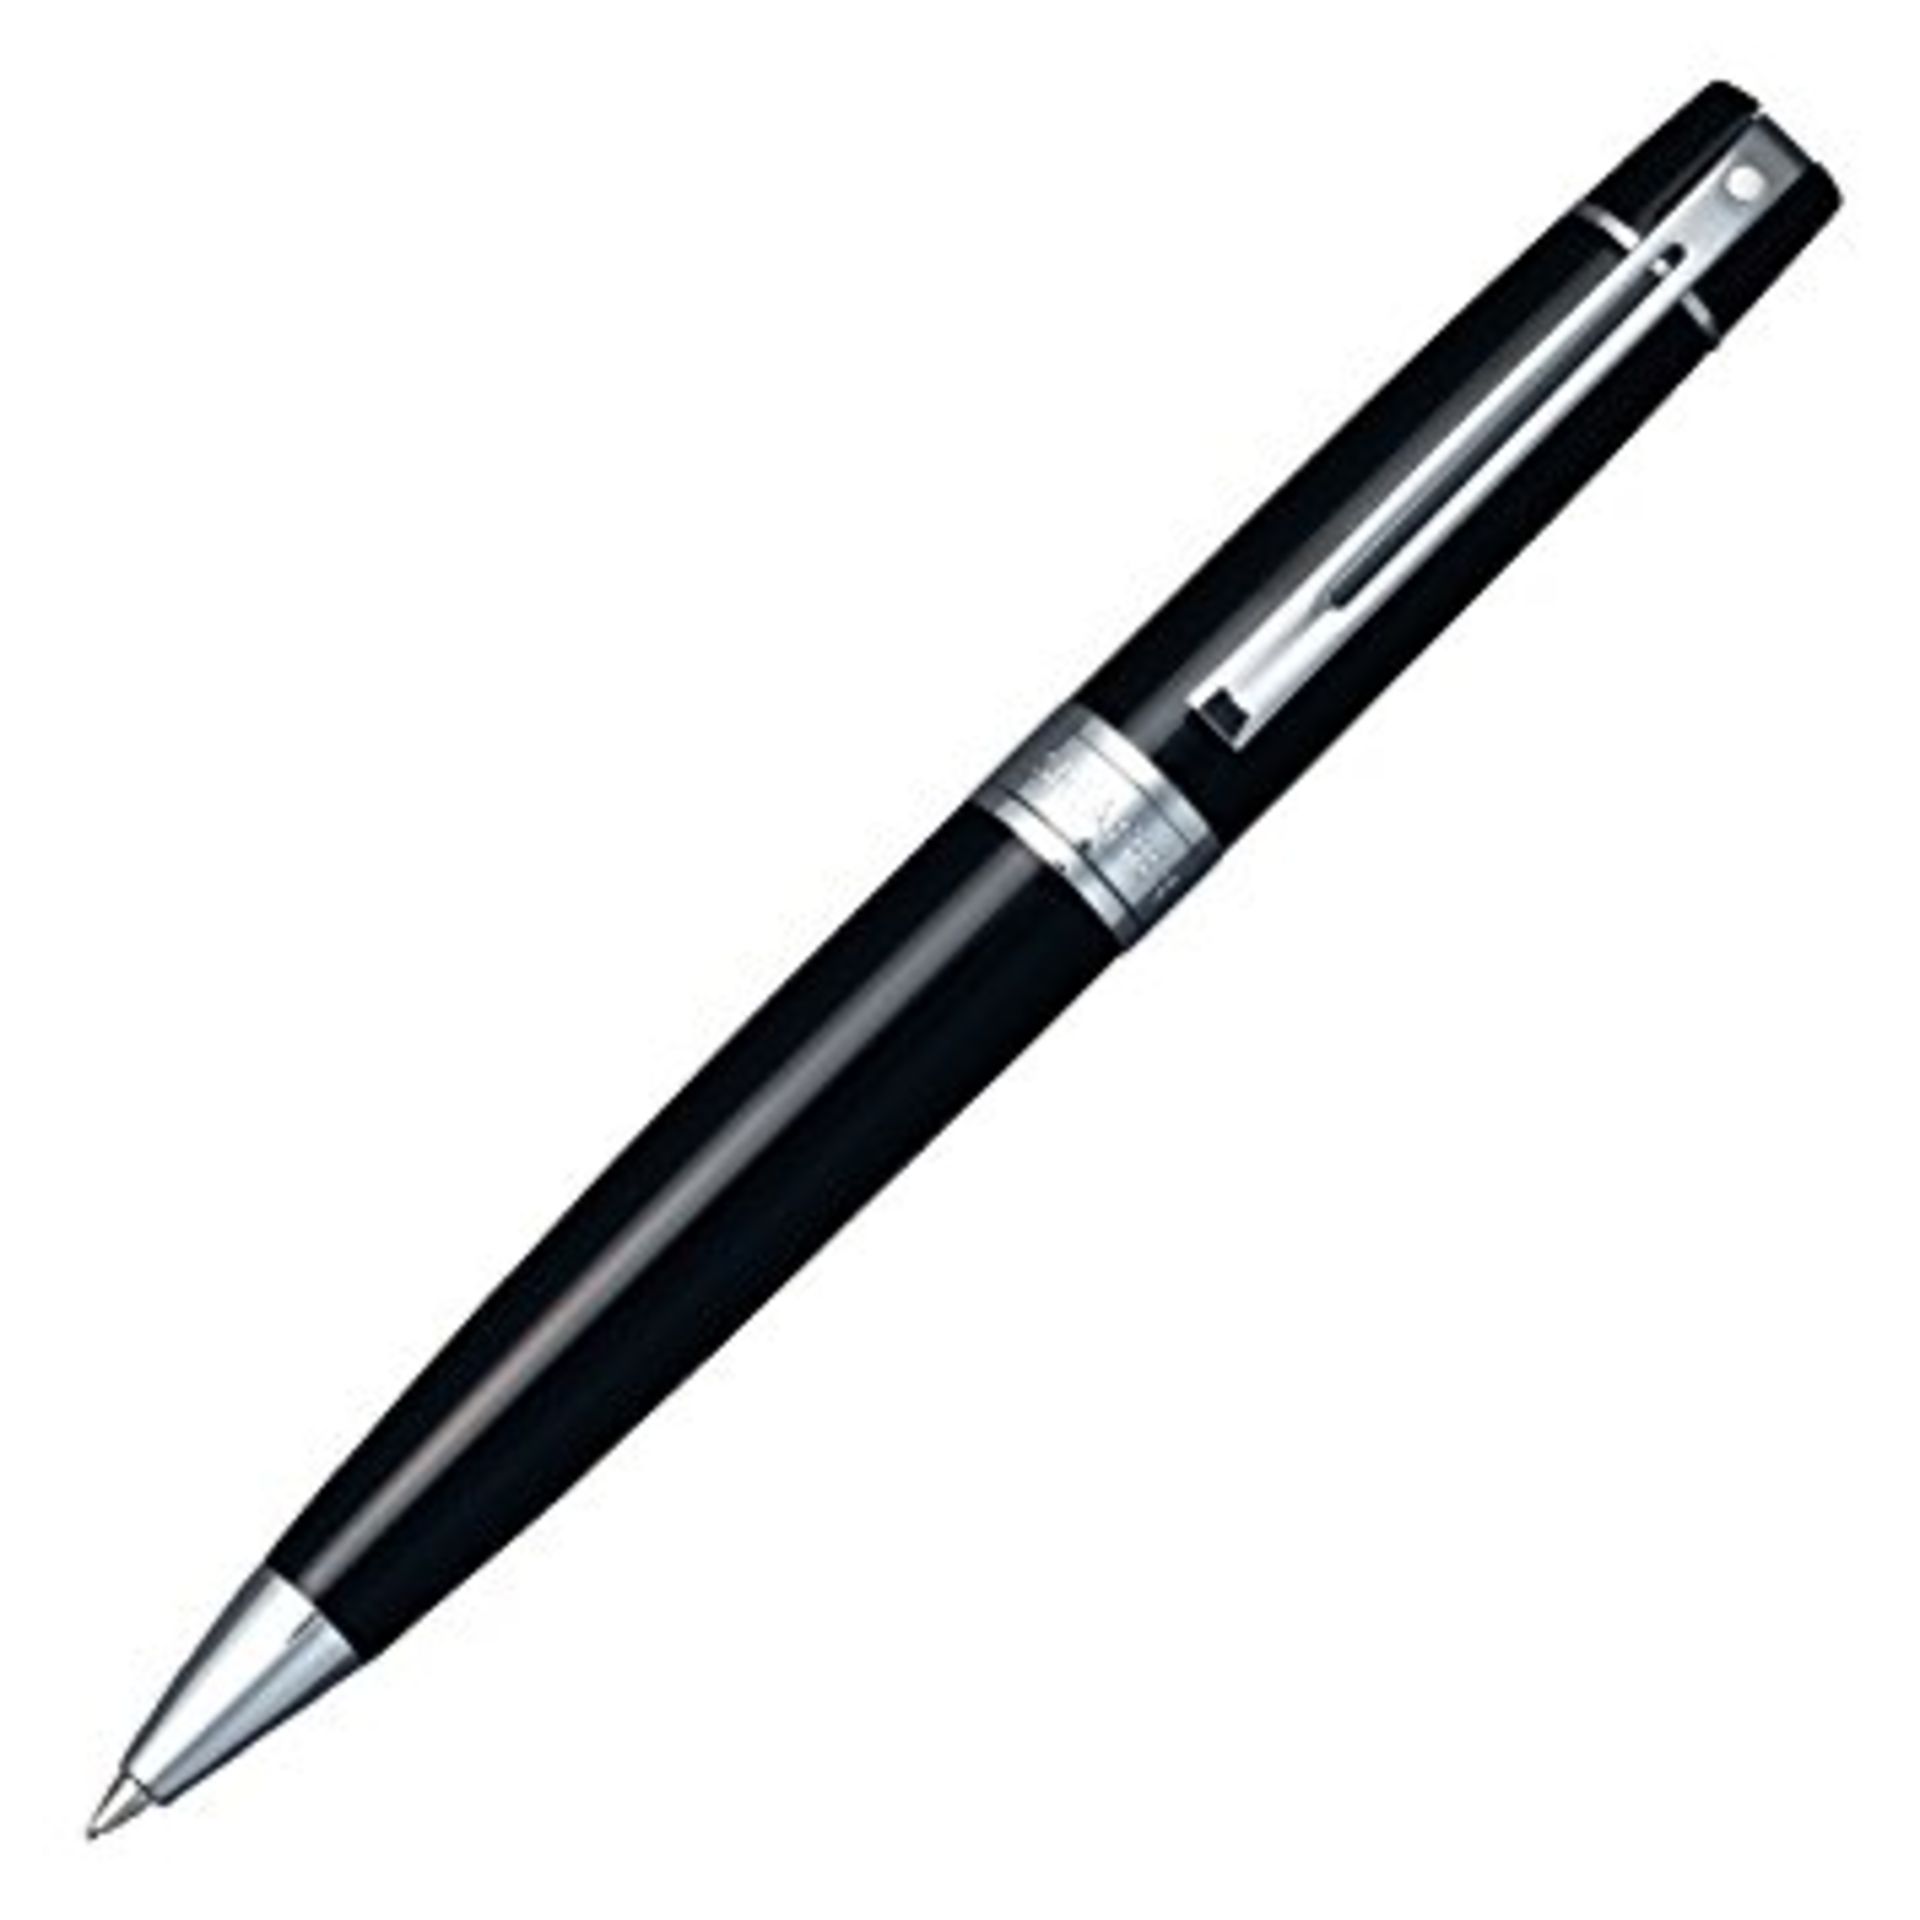 V Brand New Sheaffer Matte Black Cap & Barrel Pencil In Case